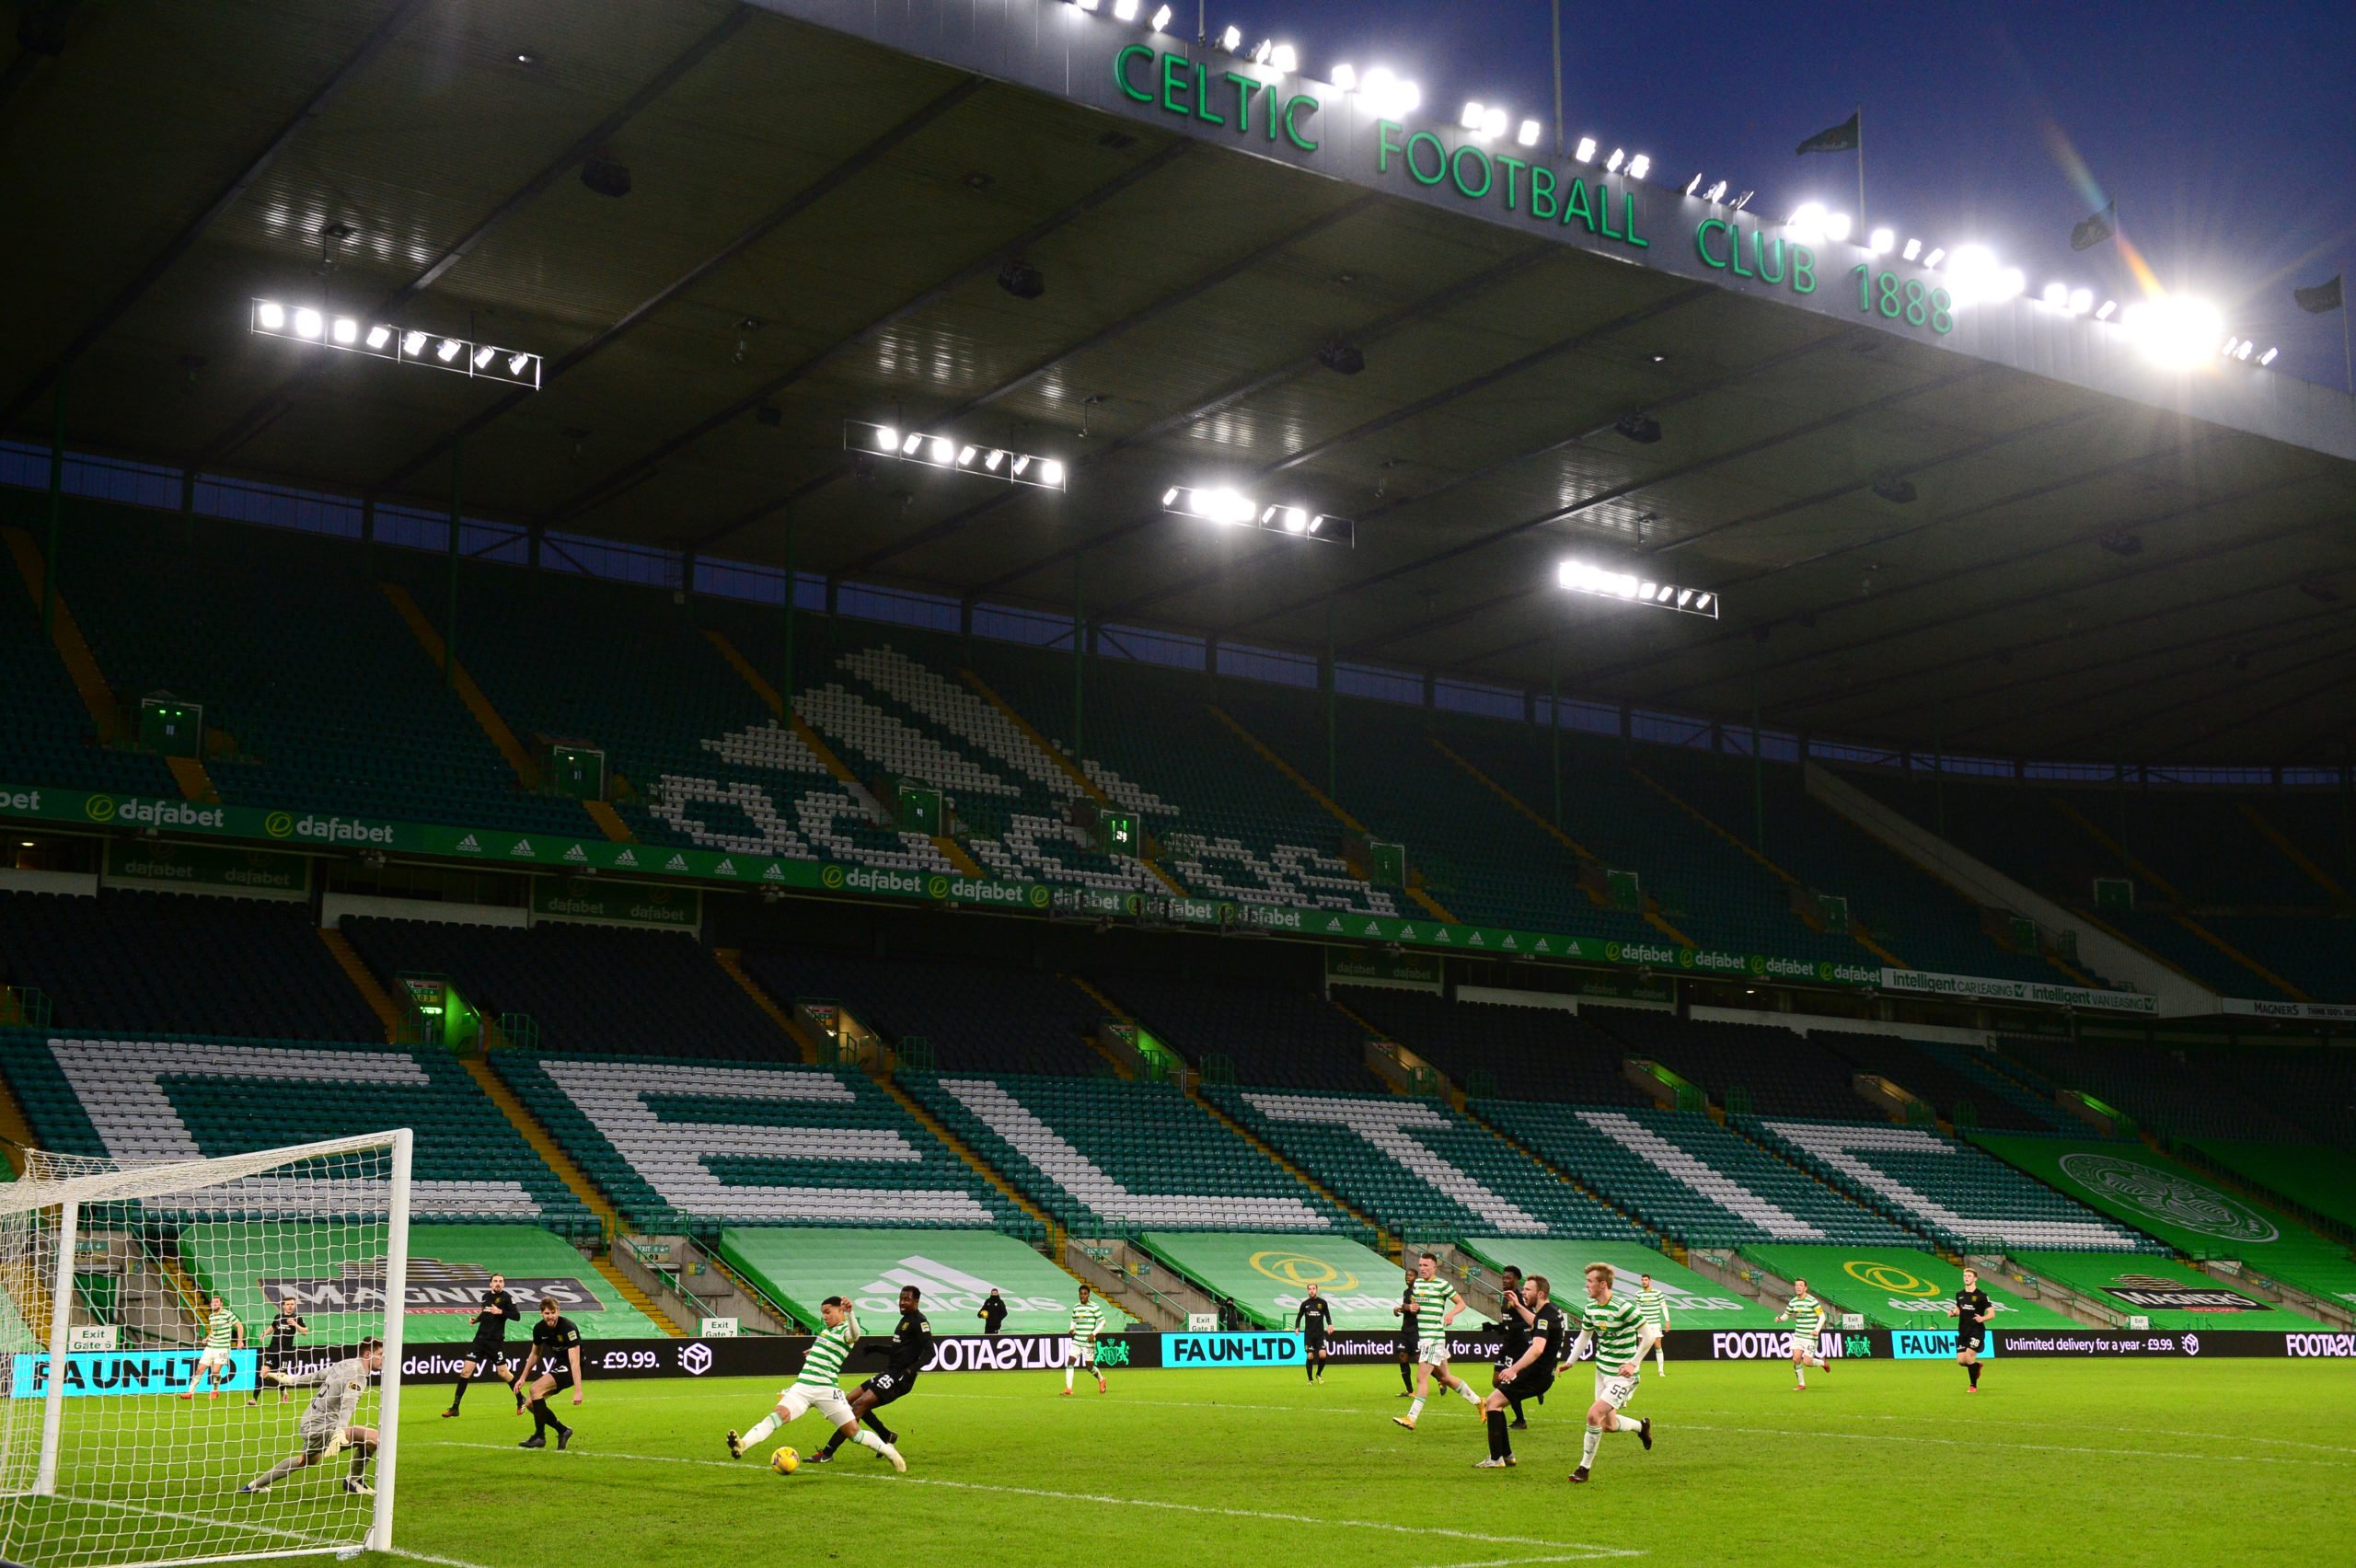 The mystery of Celtic falling apart against transfer opposition